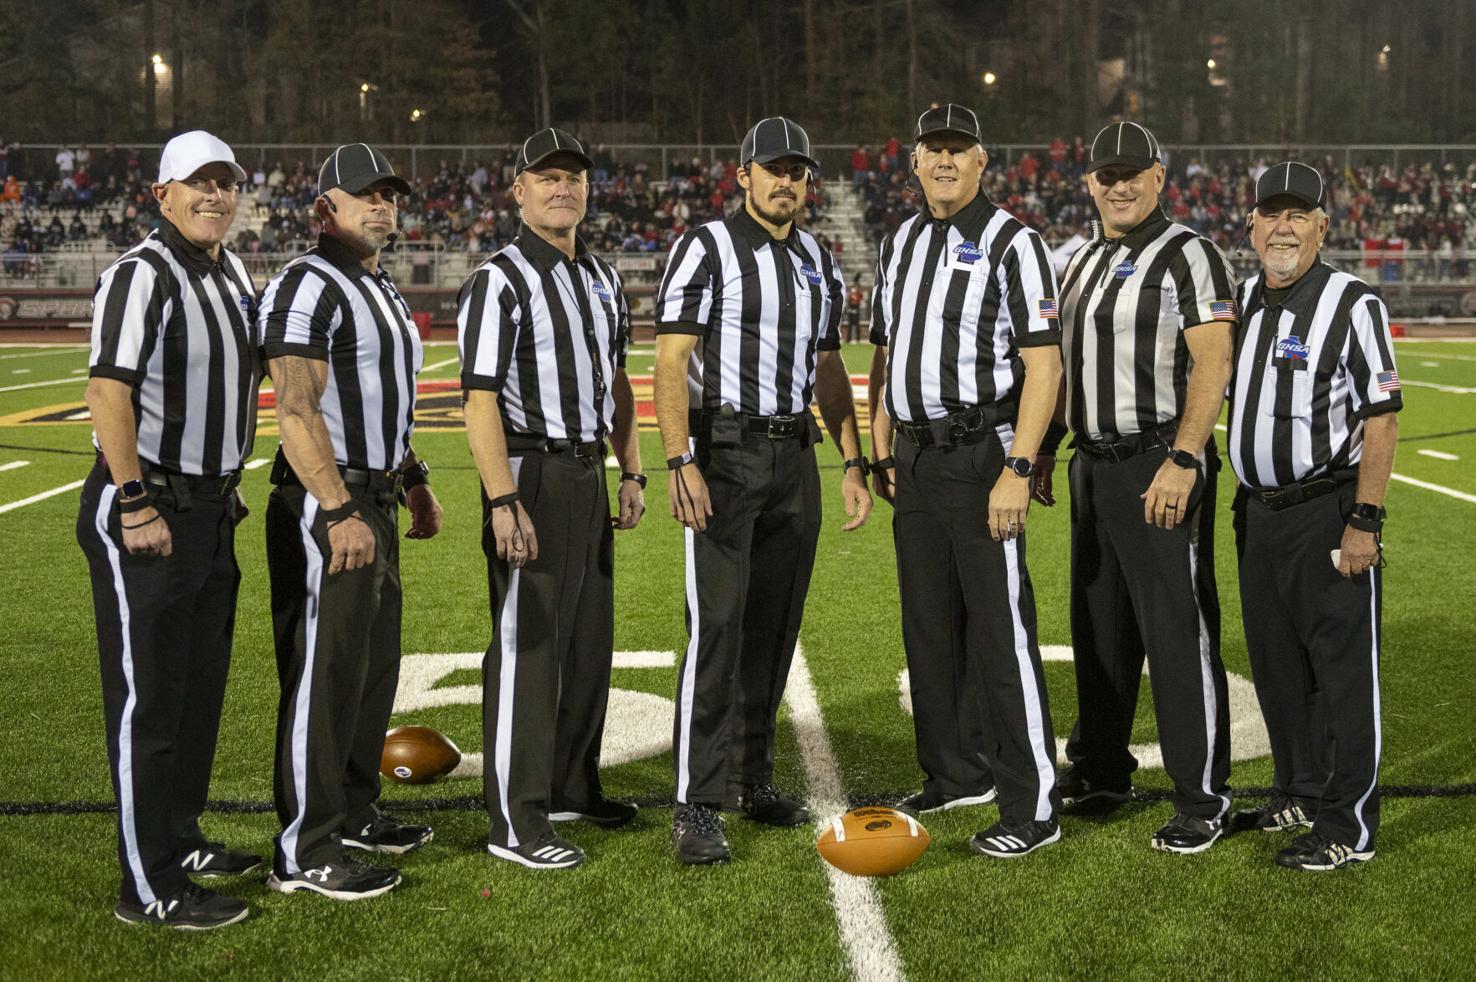 PHOTOS: Greater Atlanta Christian vs. Appling County Football | Sports | gwinnettdailypost.com